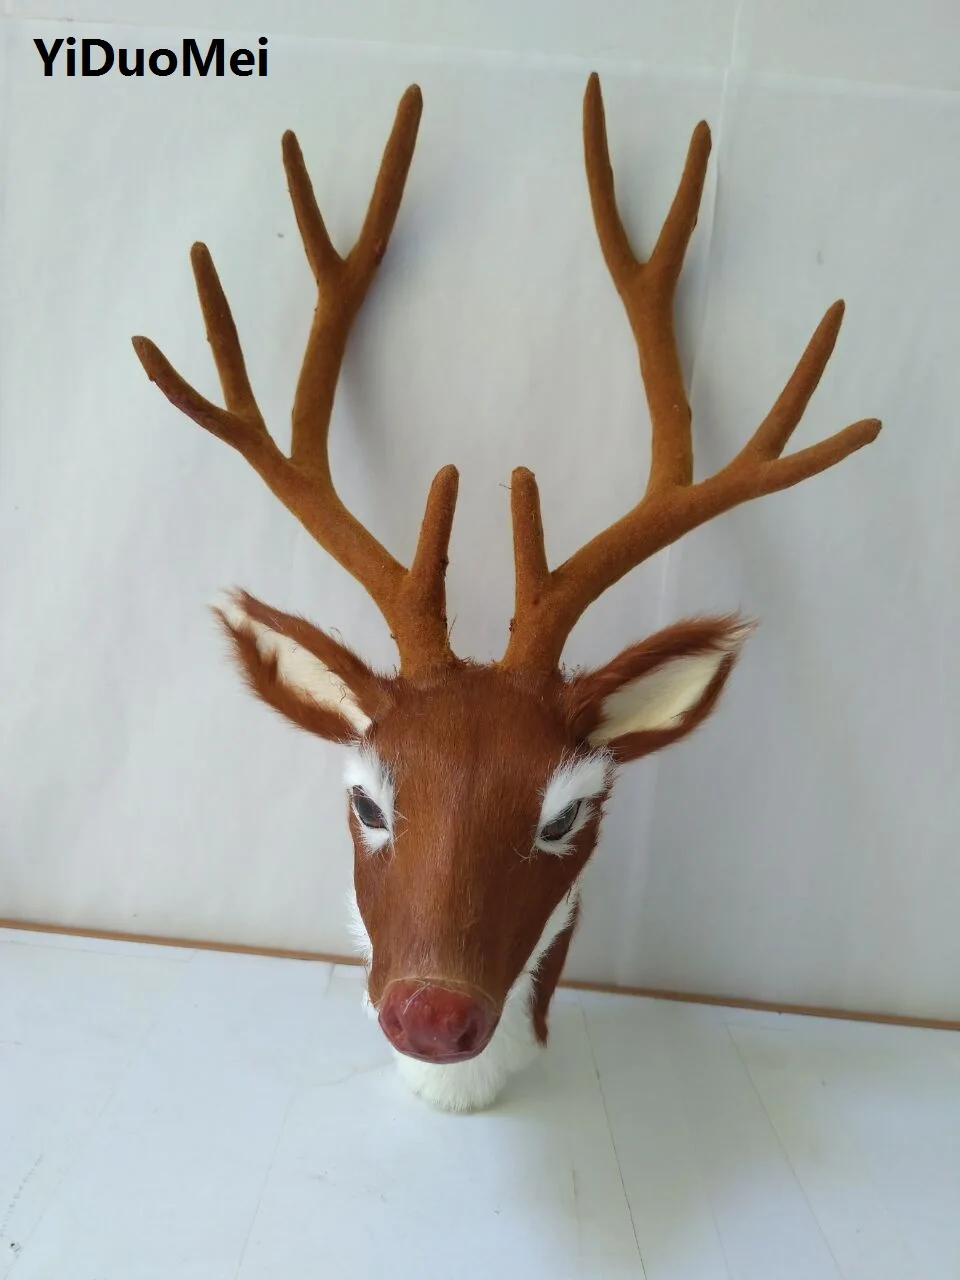 

polyethylene&furs sika deer's head model 27x18cm wall pandent handicraft prop home decoration gift d1028